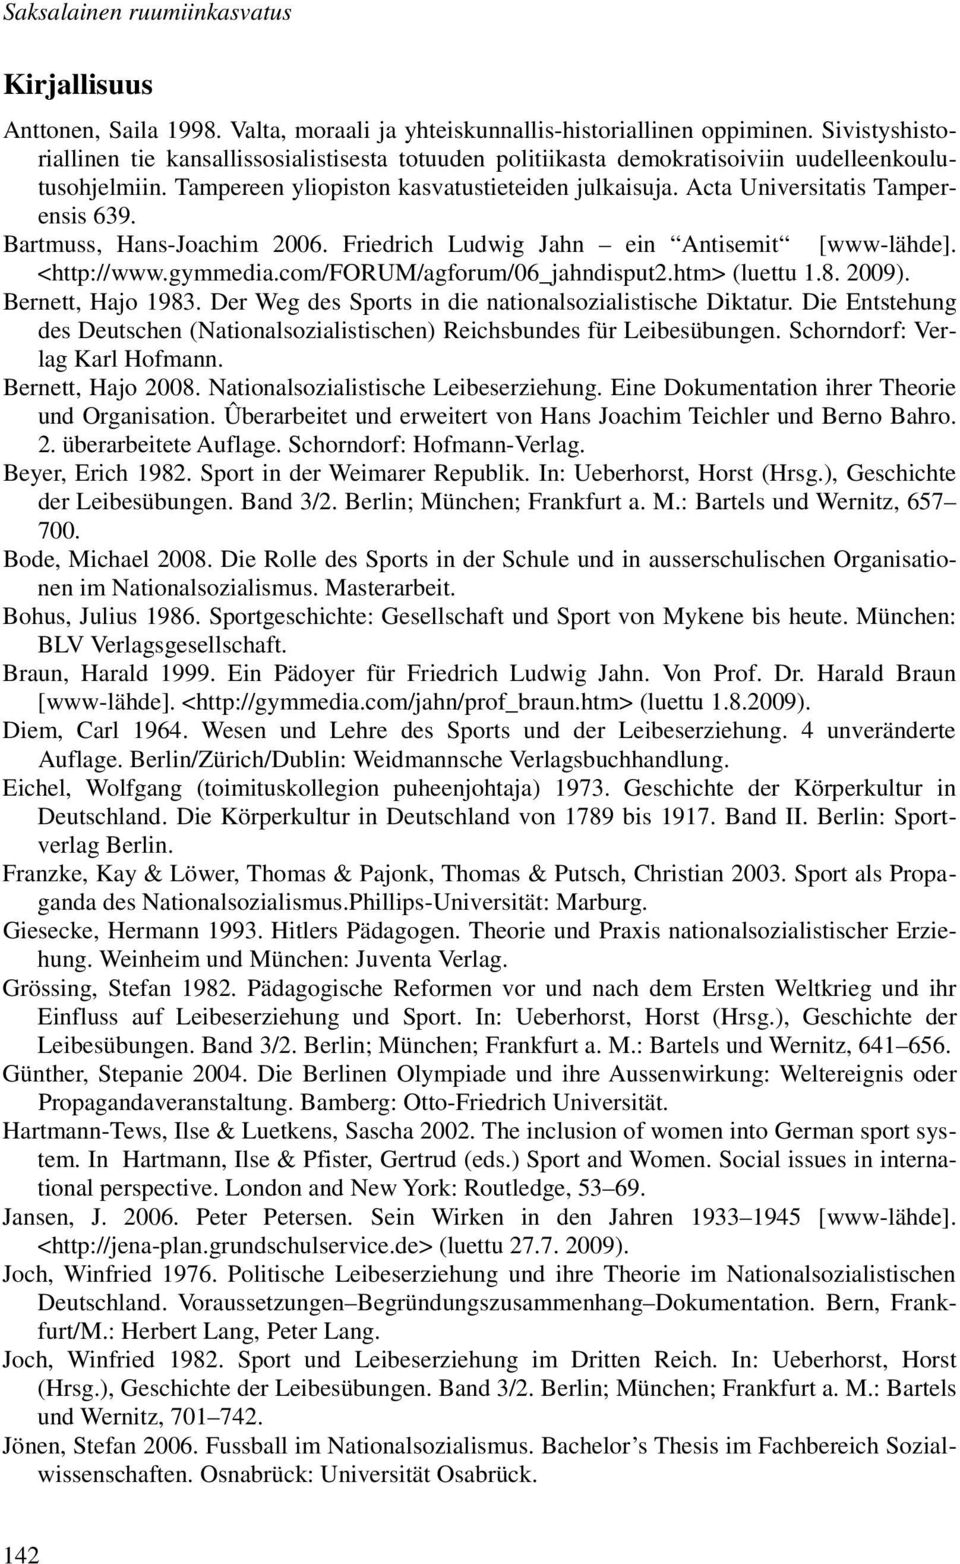 Acta Universitatis Tamperensis 639. Bartmuss, Hans-Joachim 2006. Friedrich Ludwig Jahn ein Antisemit [www-lähde]. <http://www.gymmedia.com/forum/agforum/06_jahndisput2.htm> (luettu 1.8. 2009).